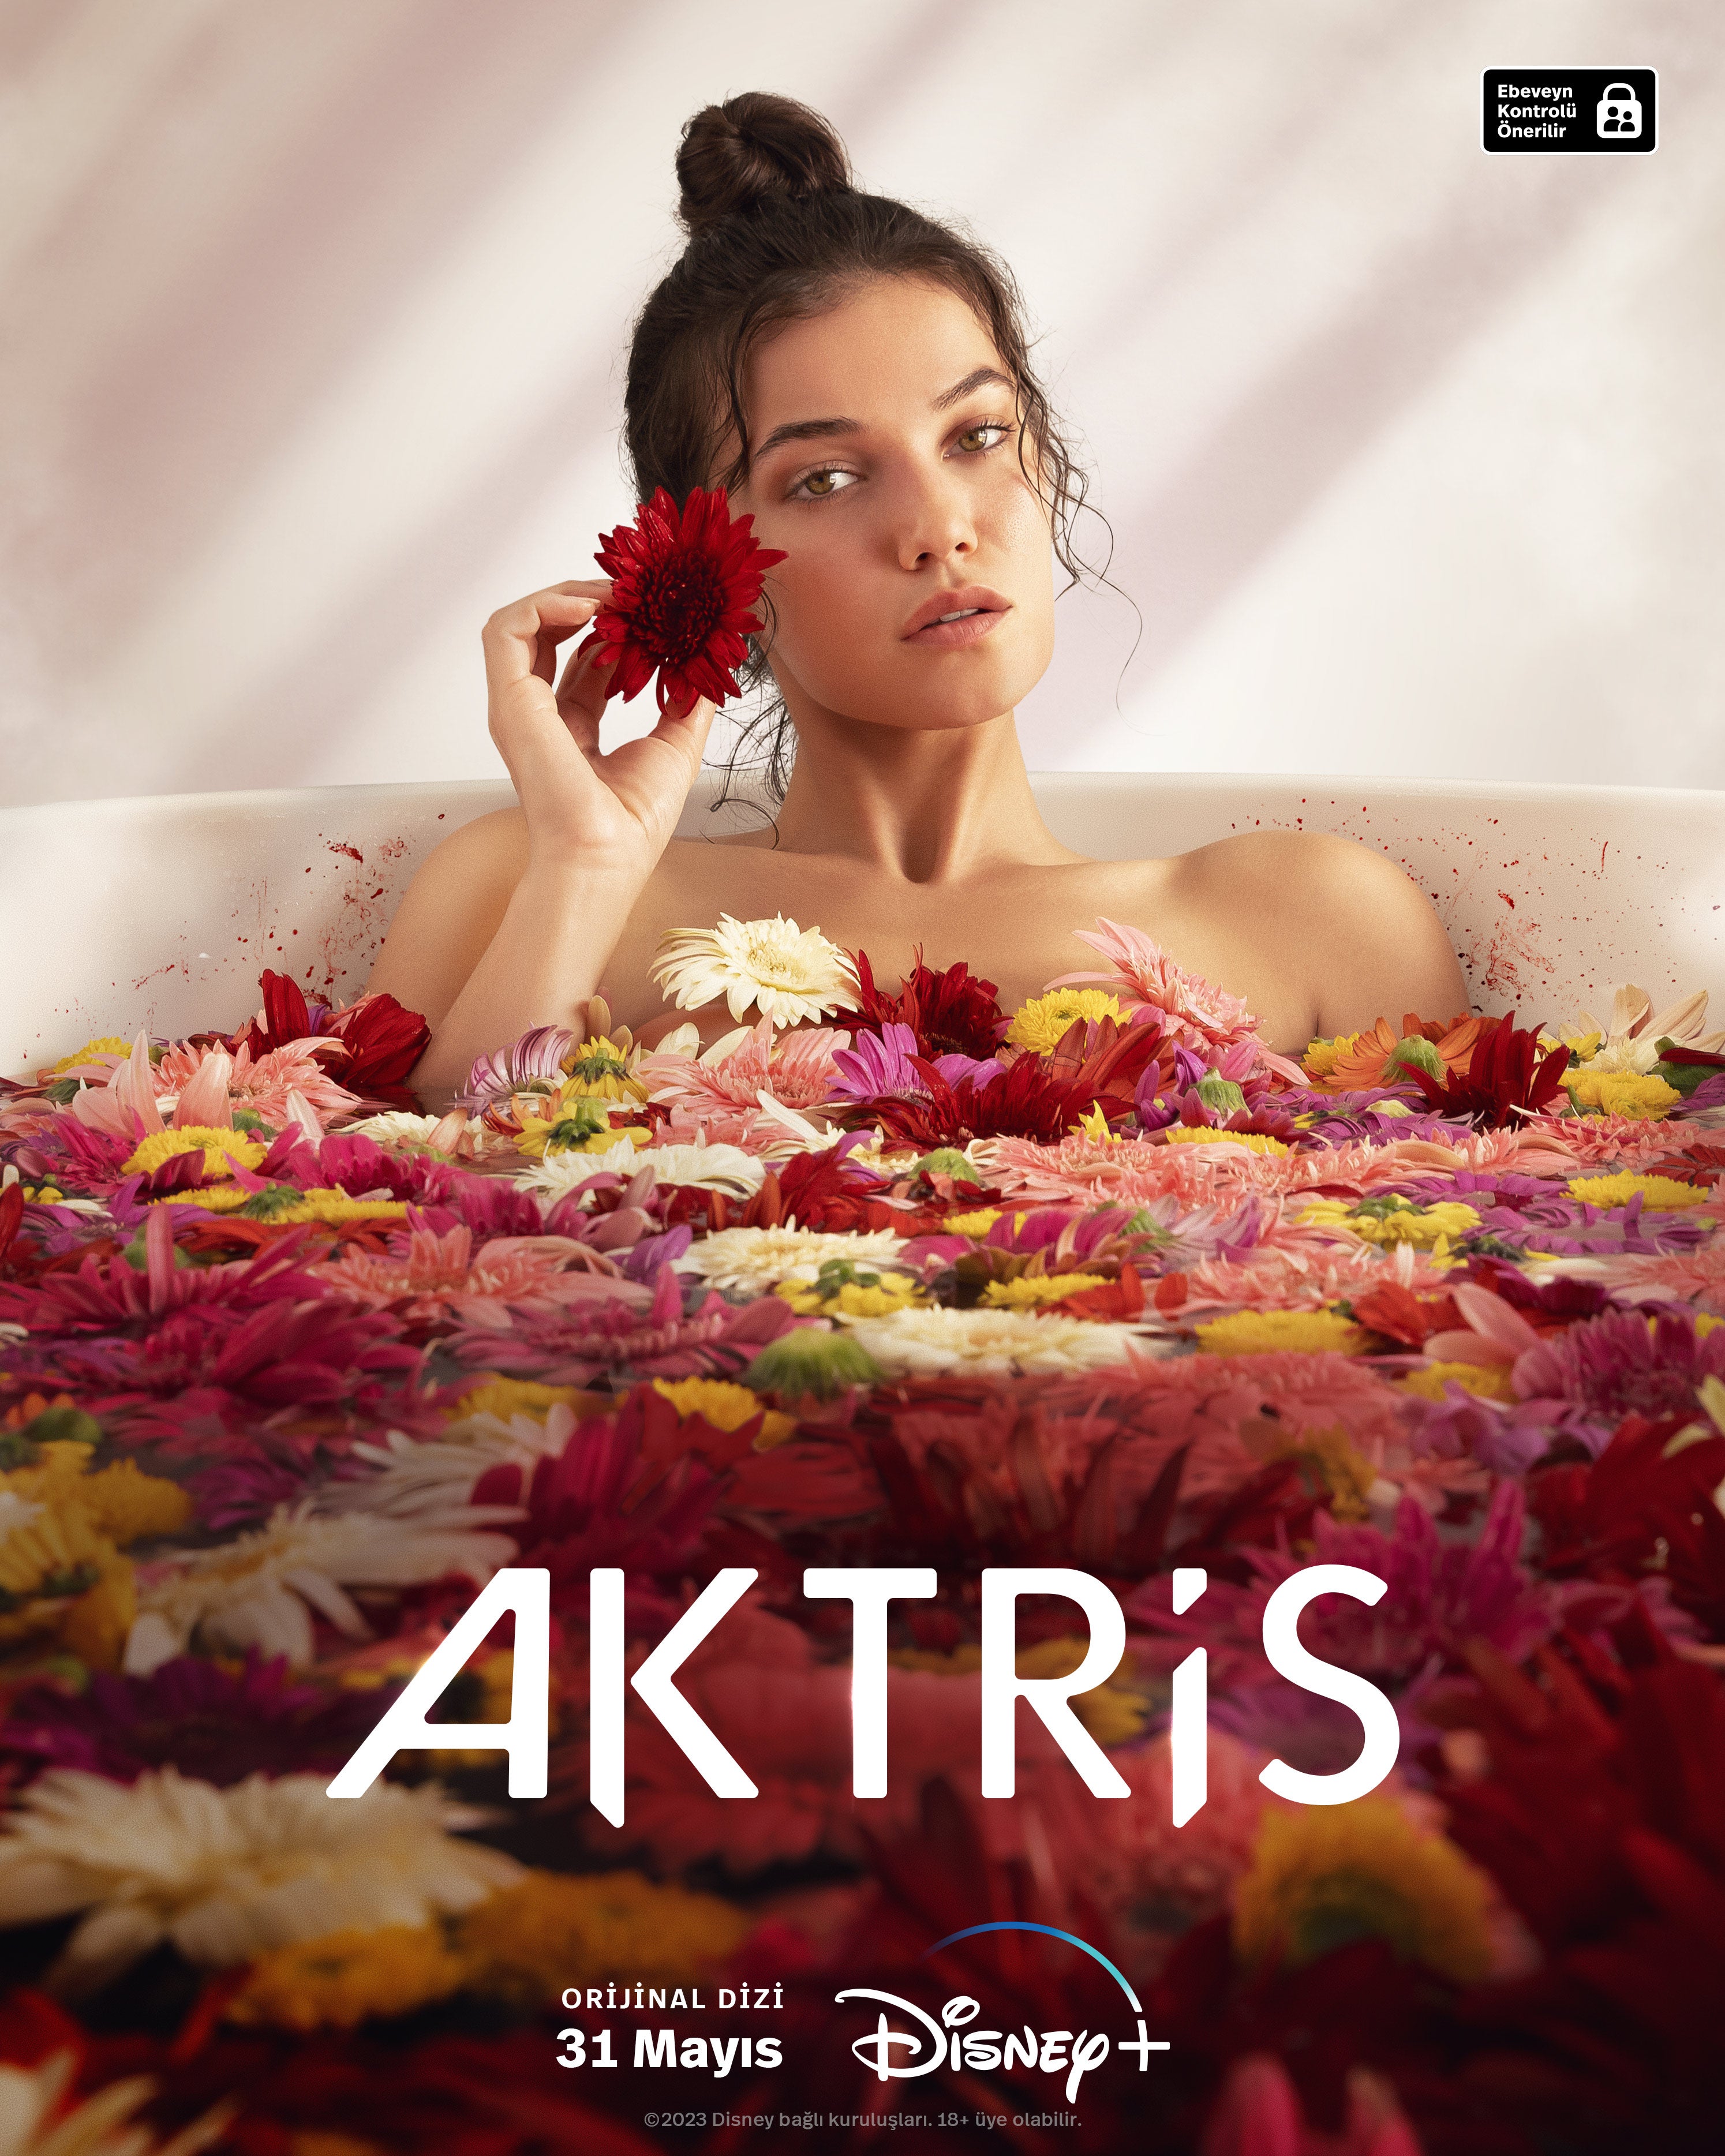 TV ratings for Actress (Aktris) in Russia. Disney+ TV series